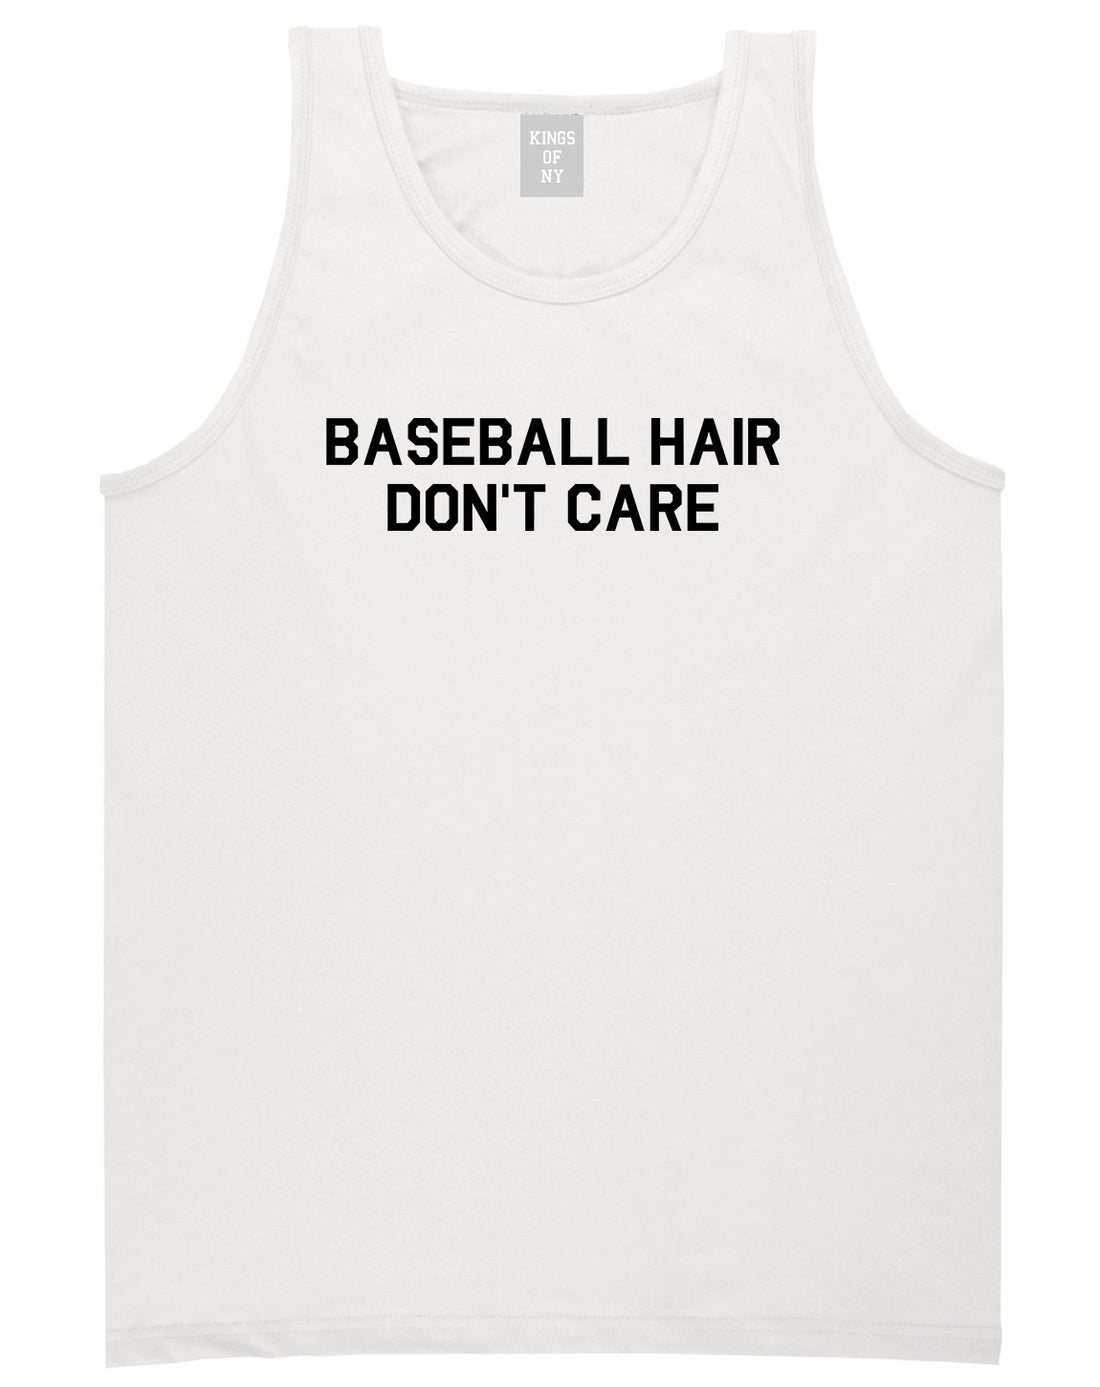 Baseball Hair Dont Care White Tank Top Shirt by Kings Of NY